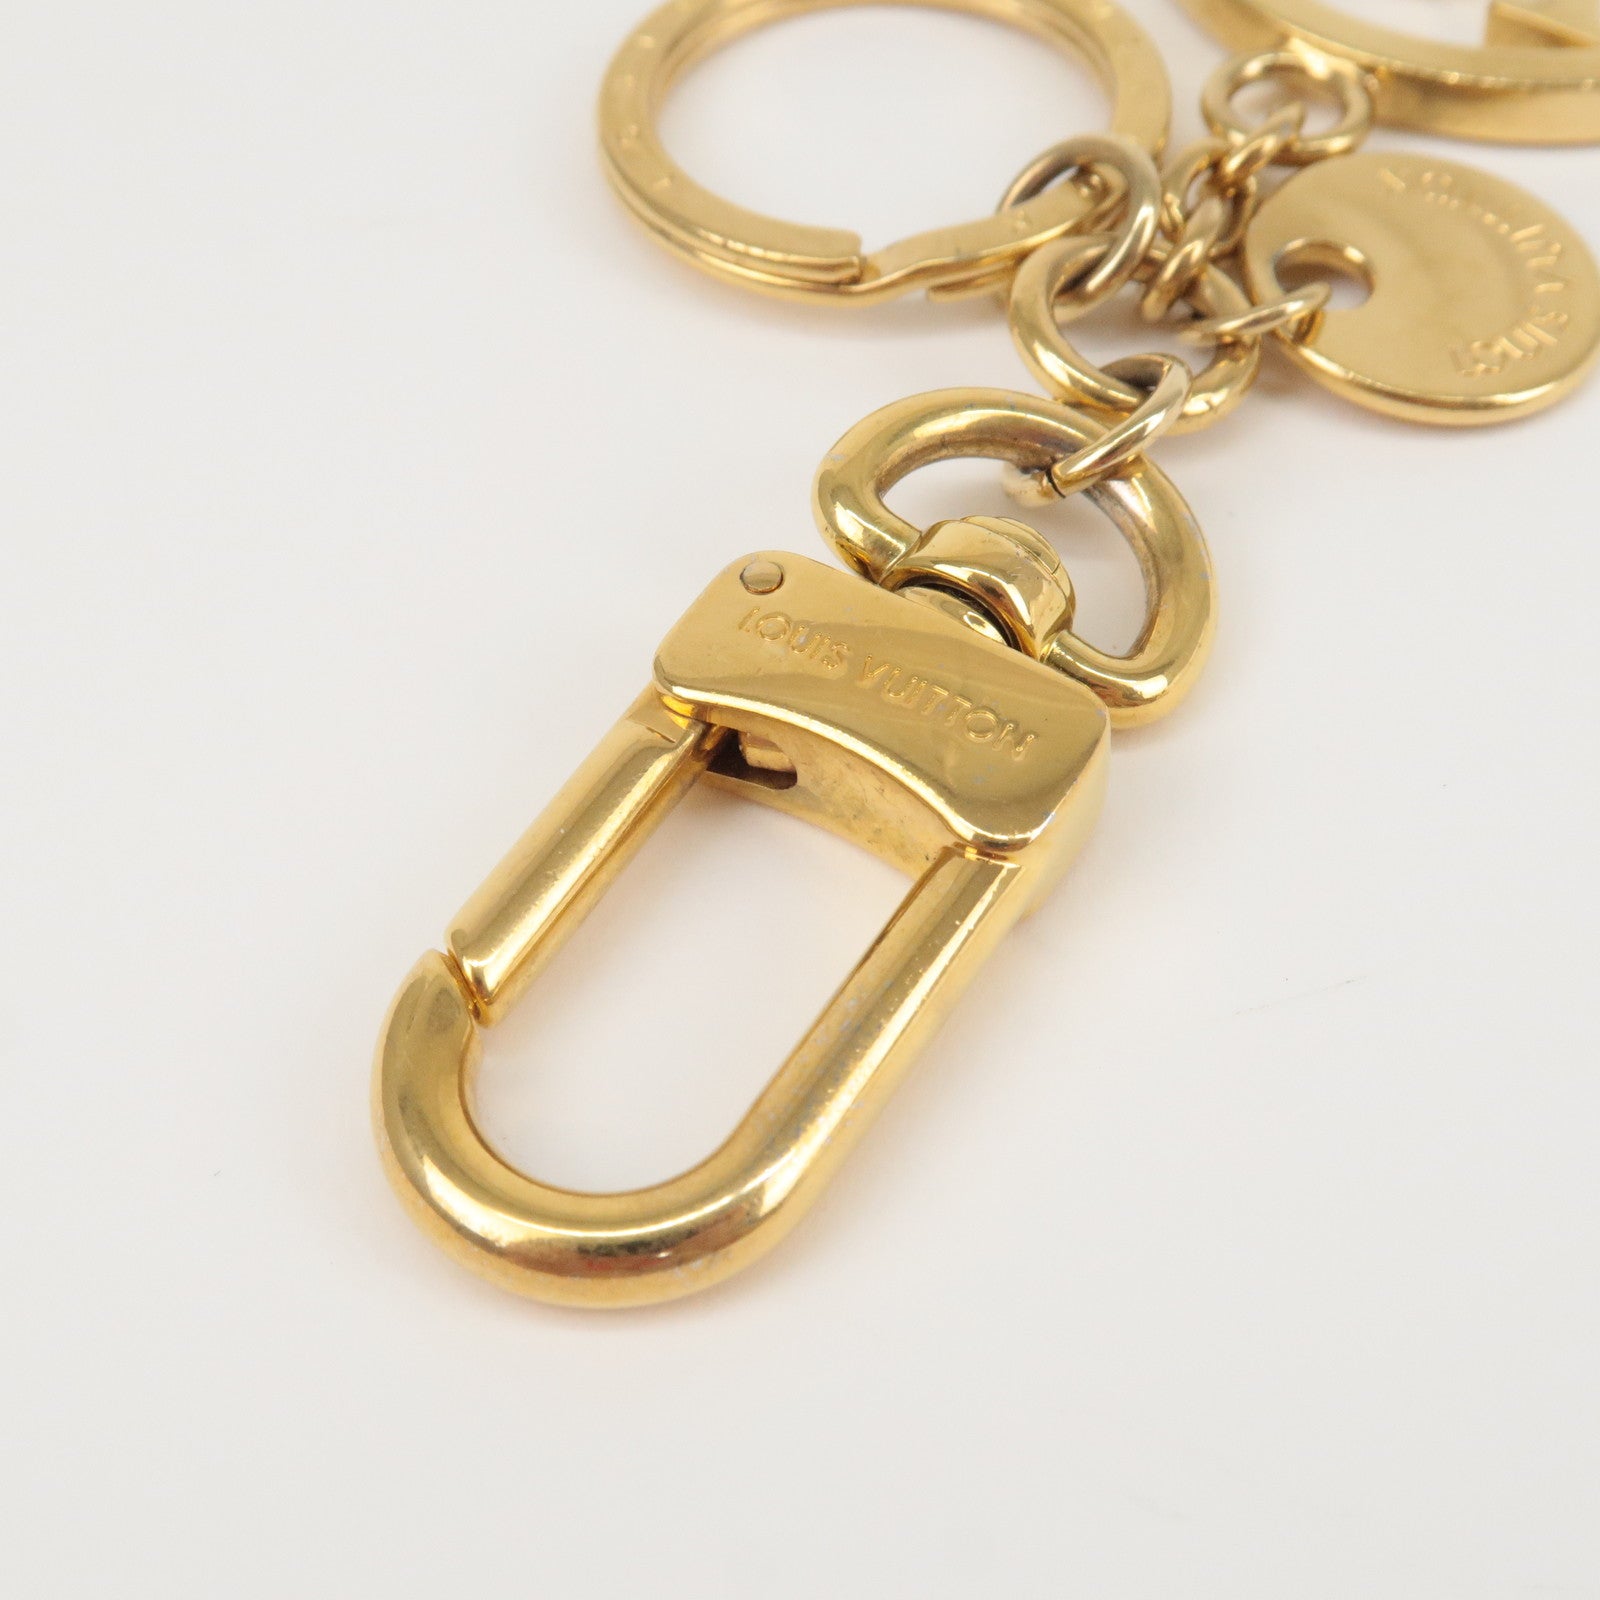 ep_vintage luxury Store - Bag - Gold - Chain - Charm - Key